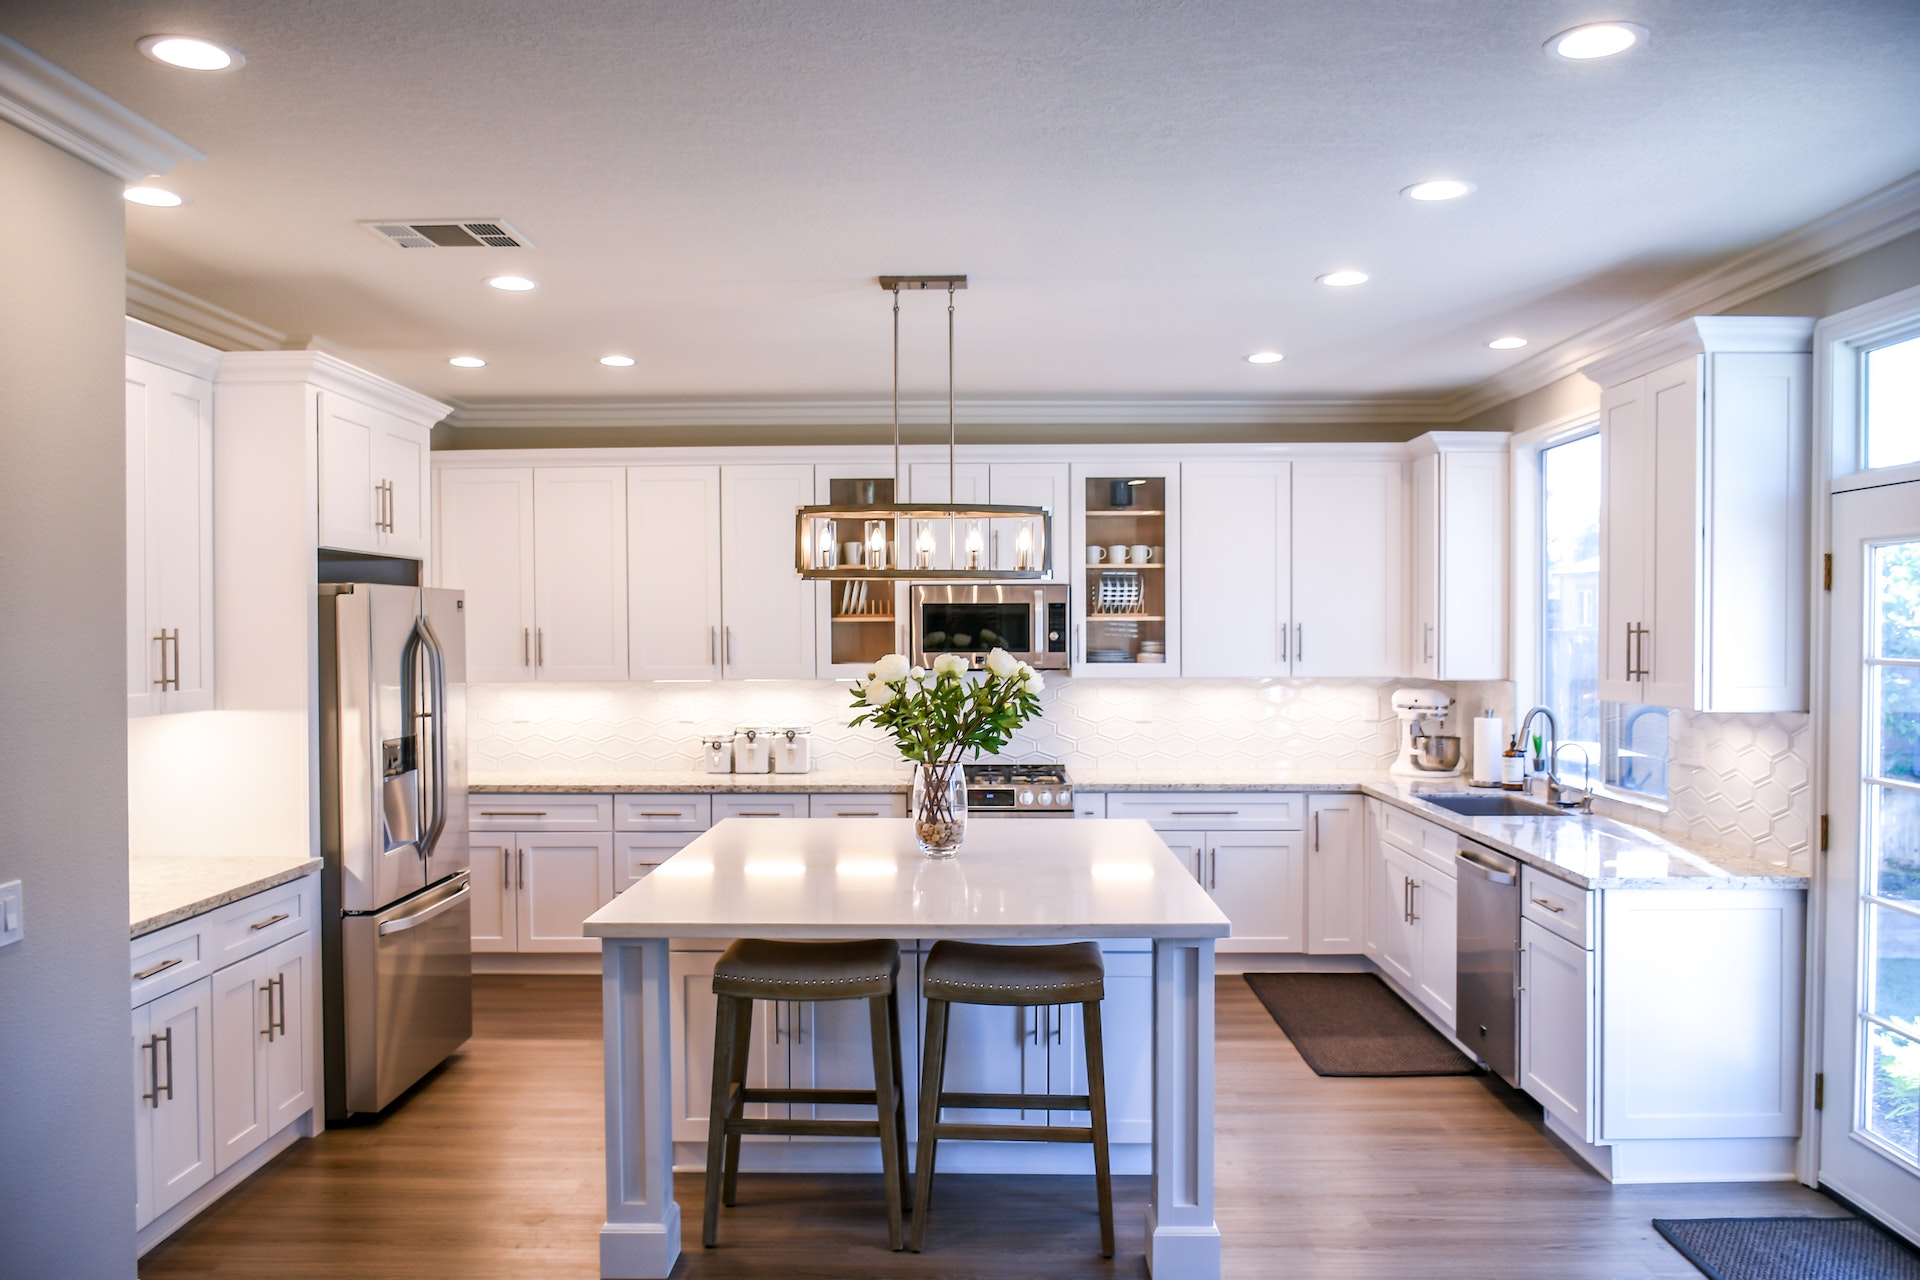 A clean, all-white kitchen